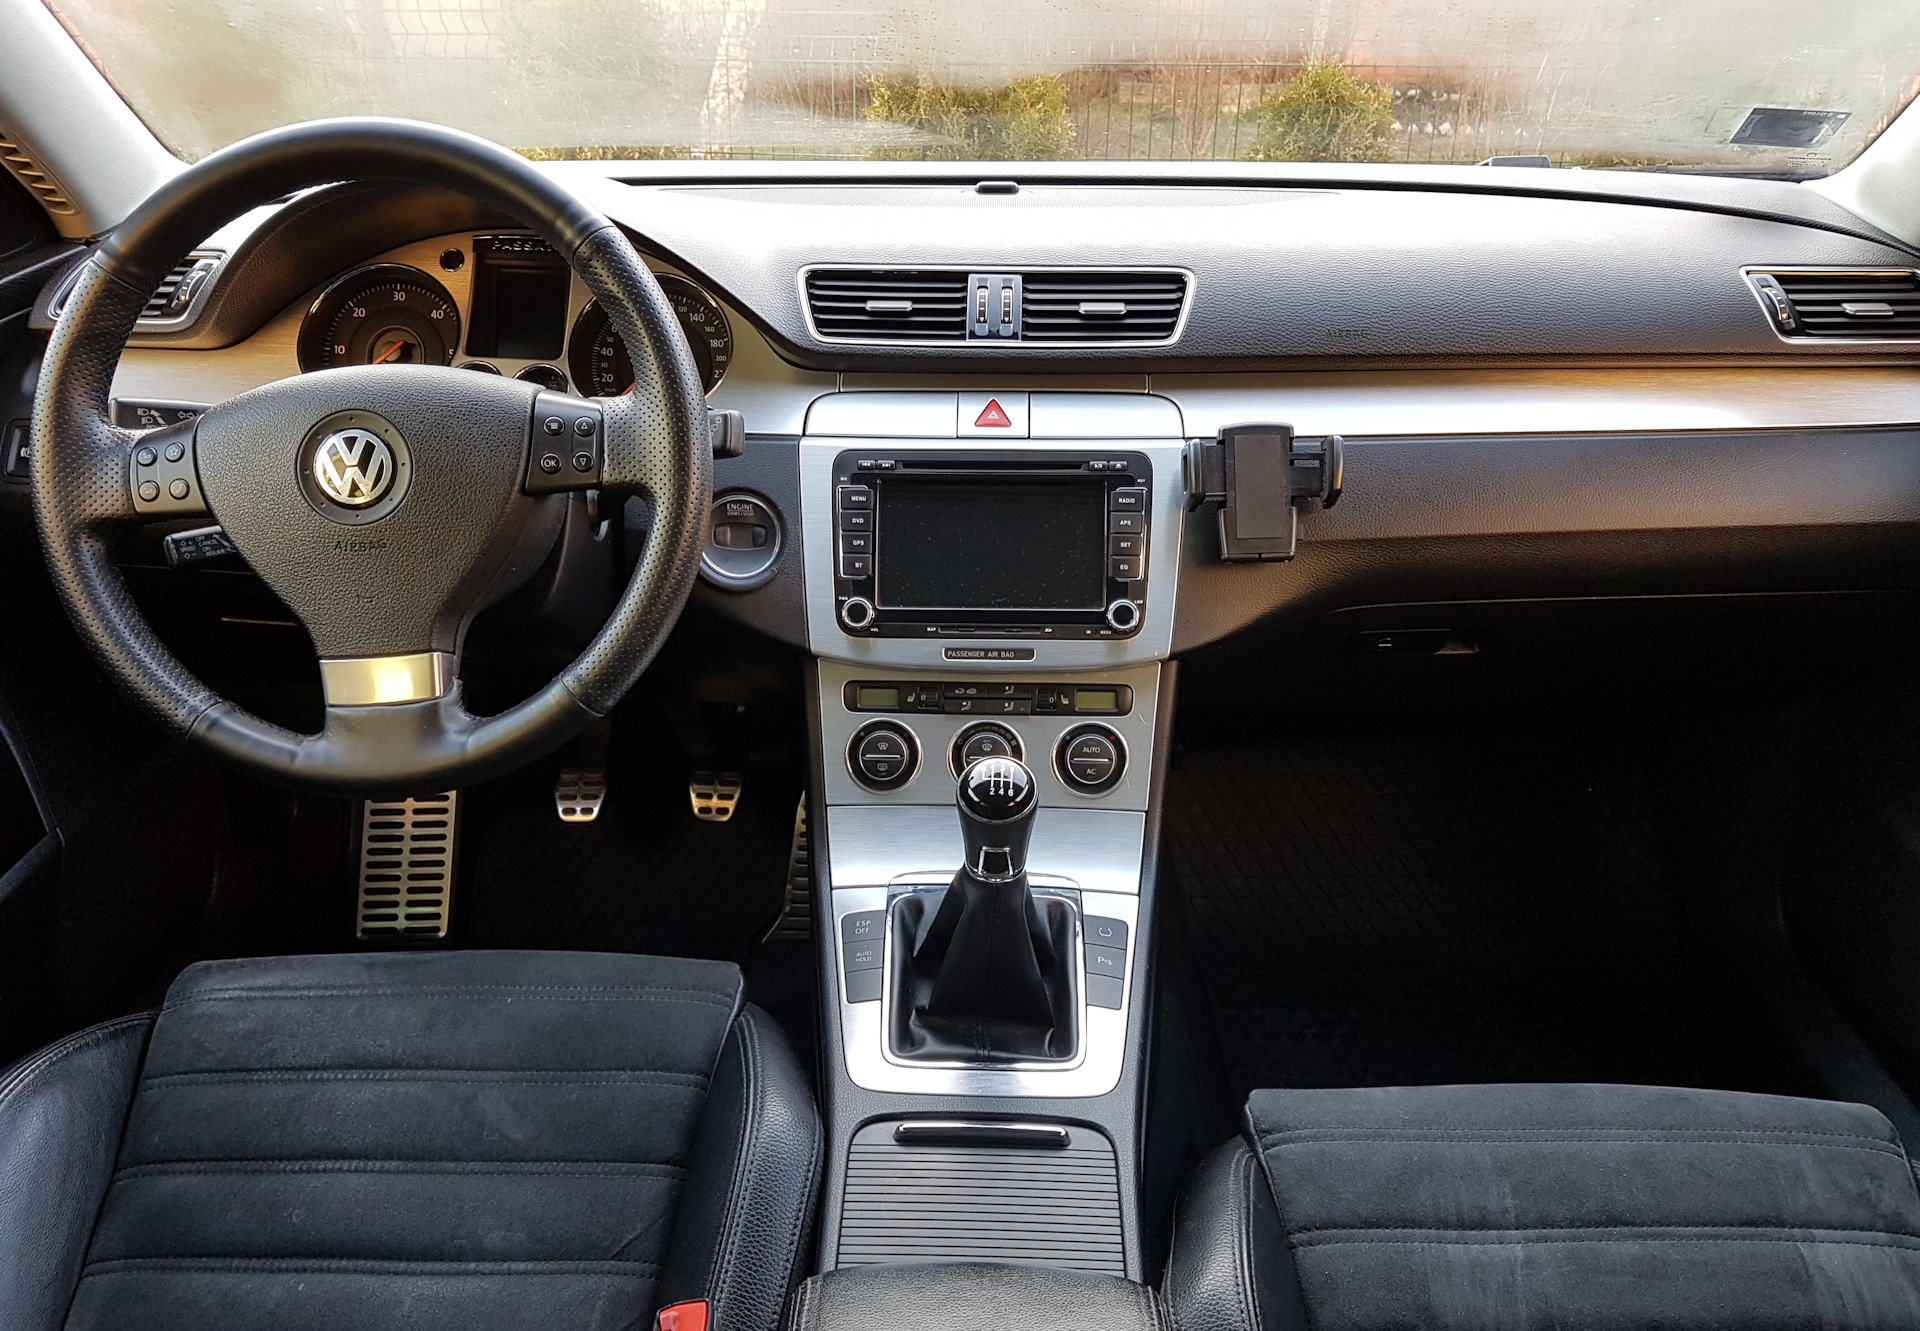 Фольксваген пассат б6 2008. VW Passat b6 салон. Фольксваген Пассат б6 2008 салон. WV Passat b6 салон. Volkswagen Passat b6 Interior.